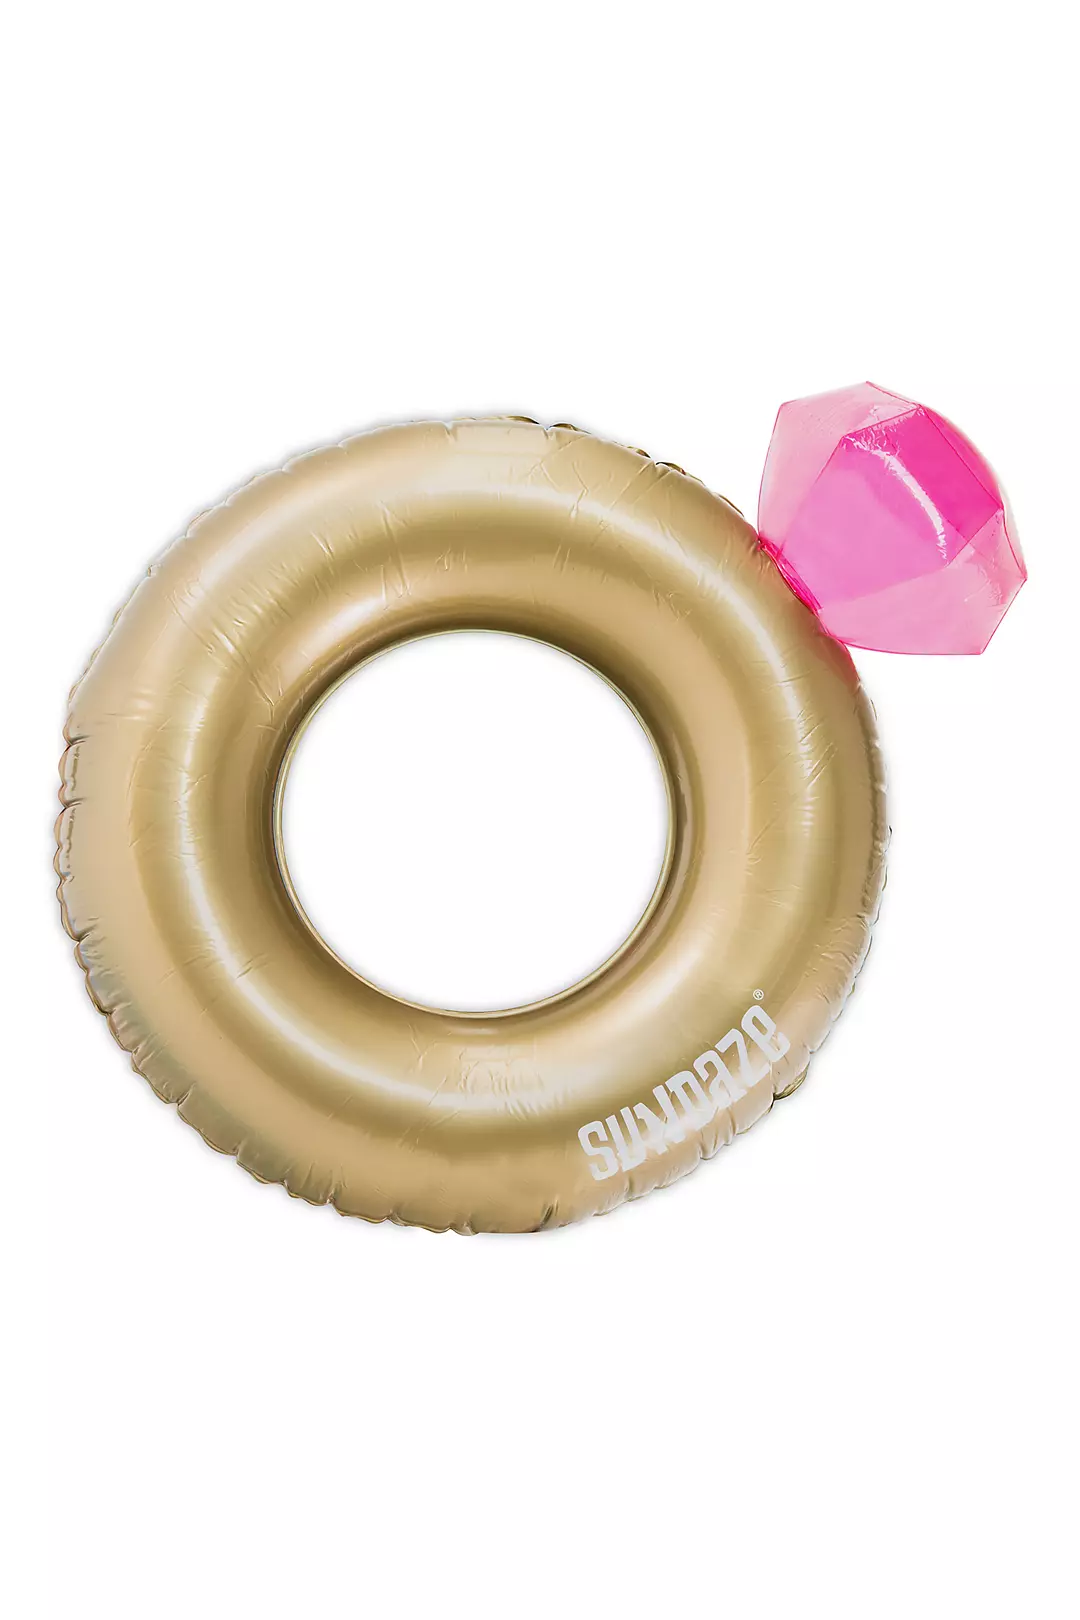 Diamond Ring Inflatable Pool Float Image